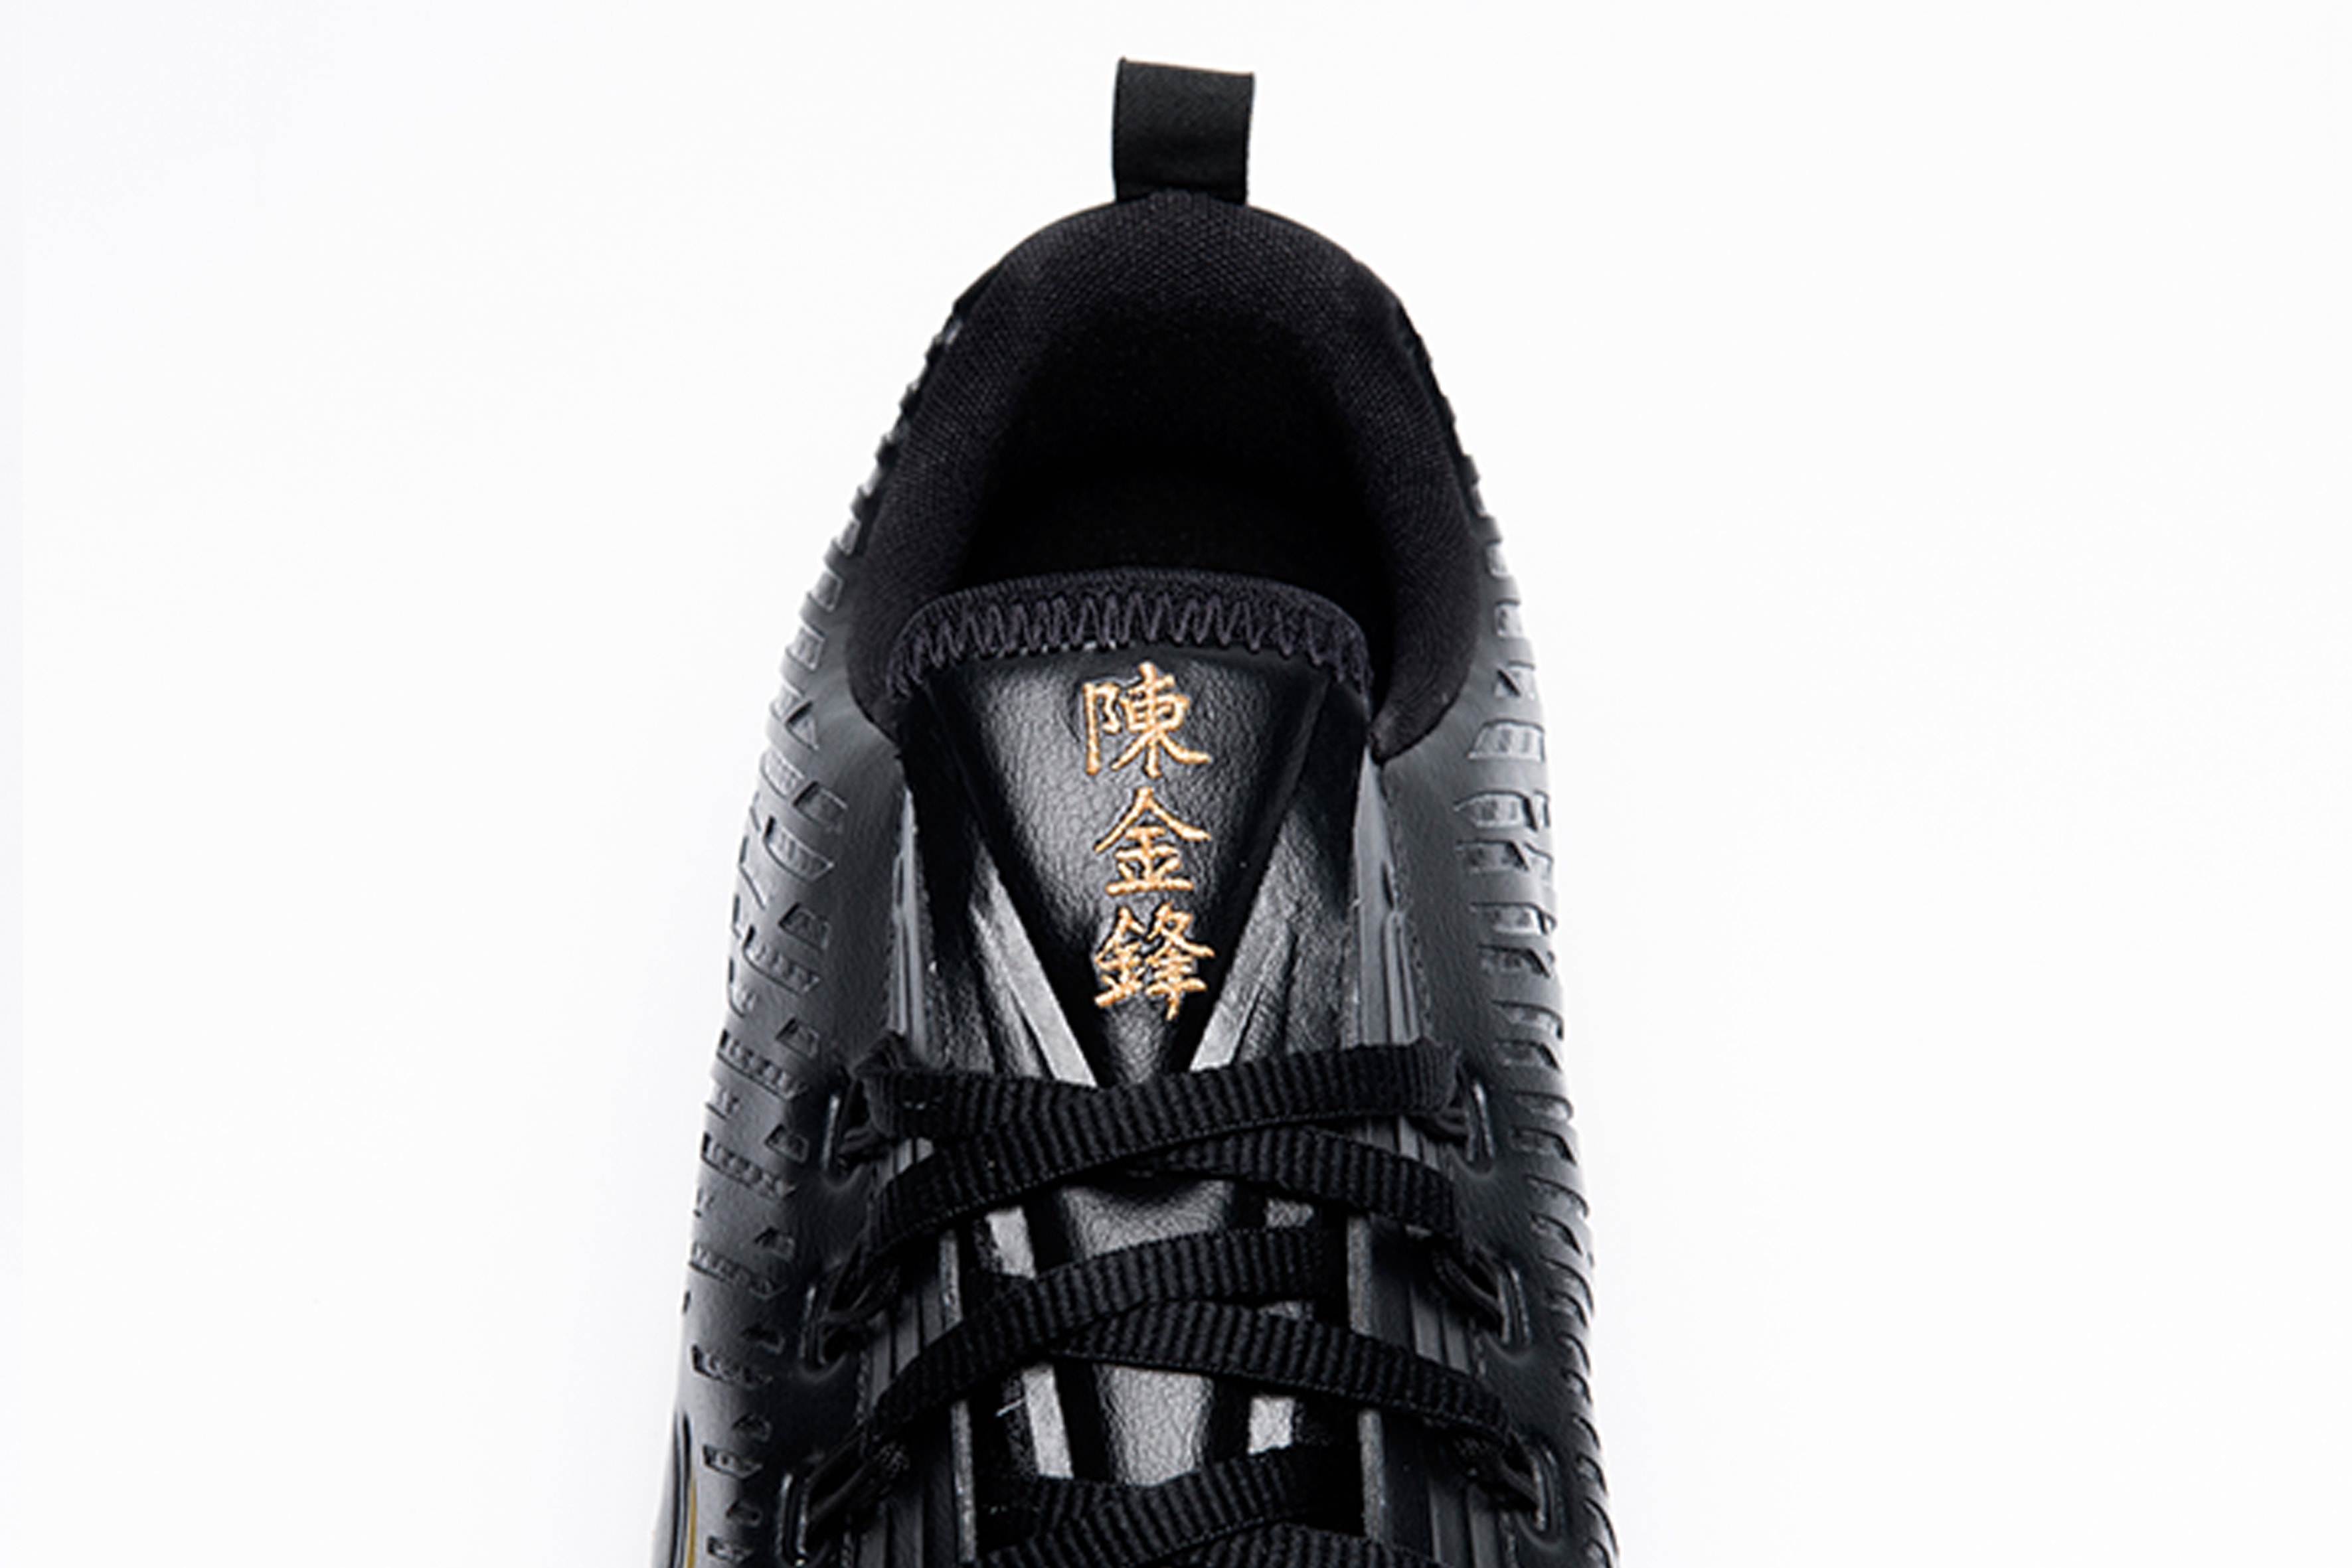 Nike made special edition baseball shoes for lamigo player chen